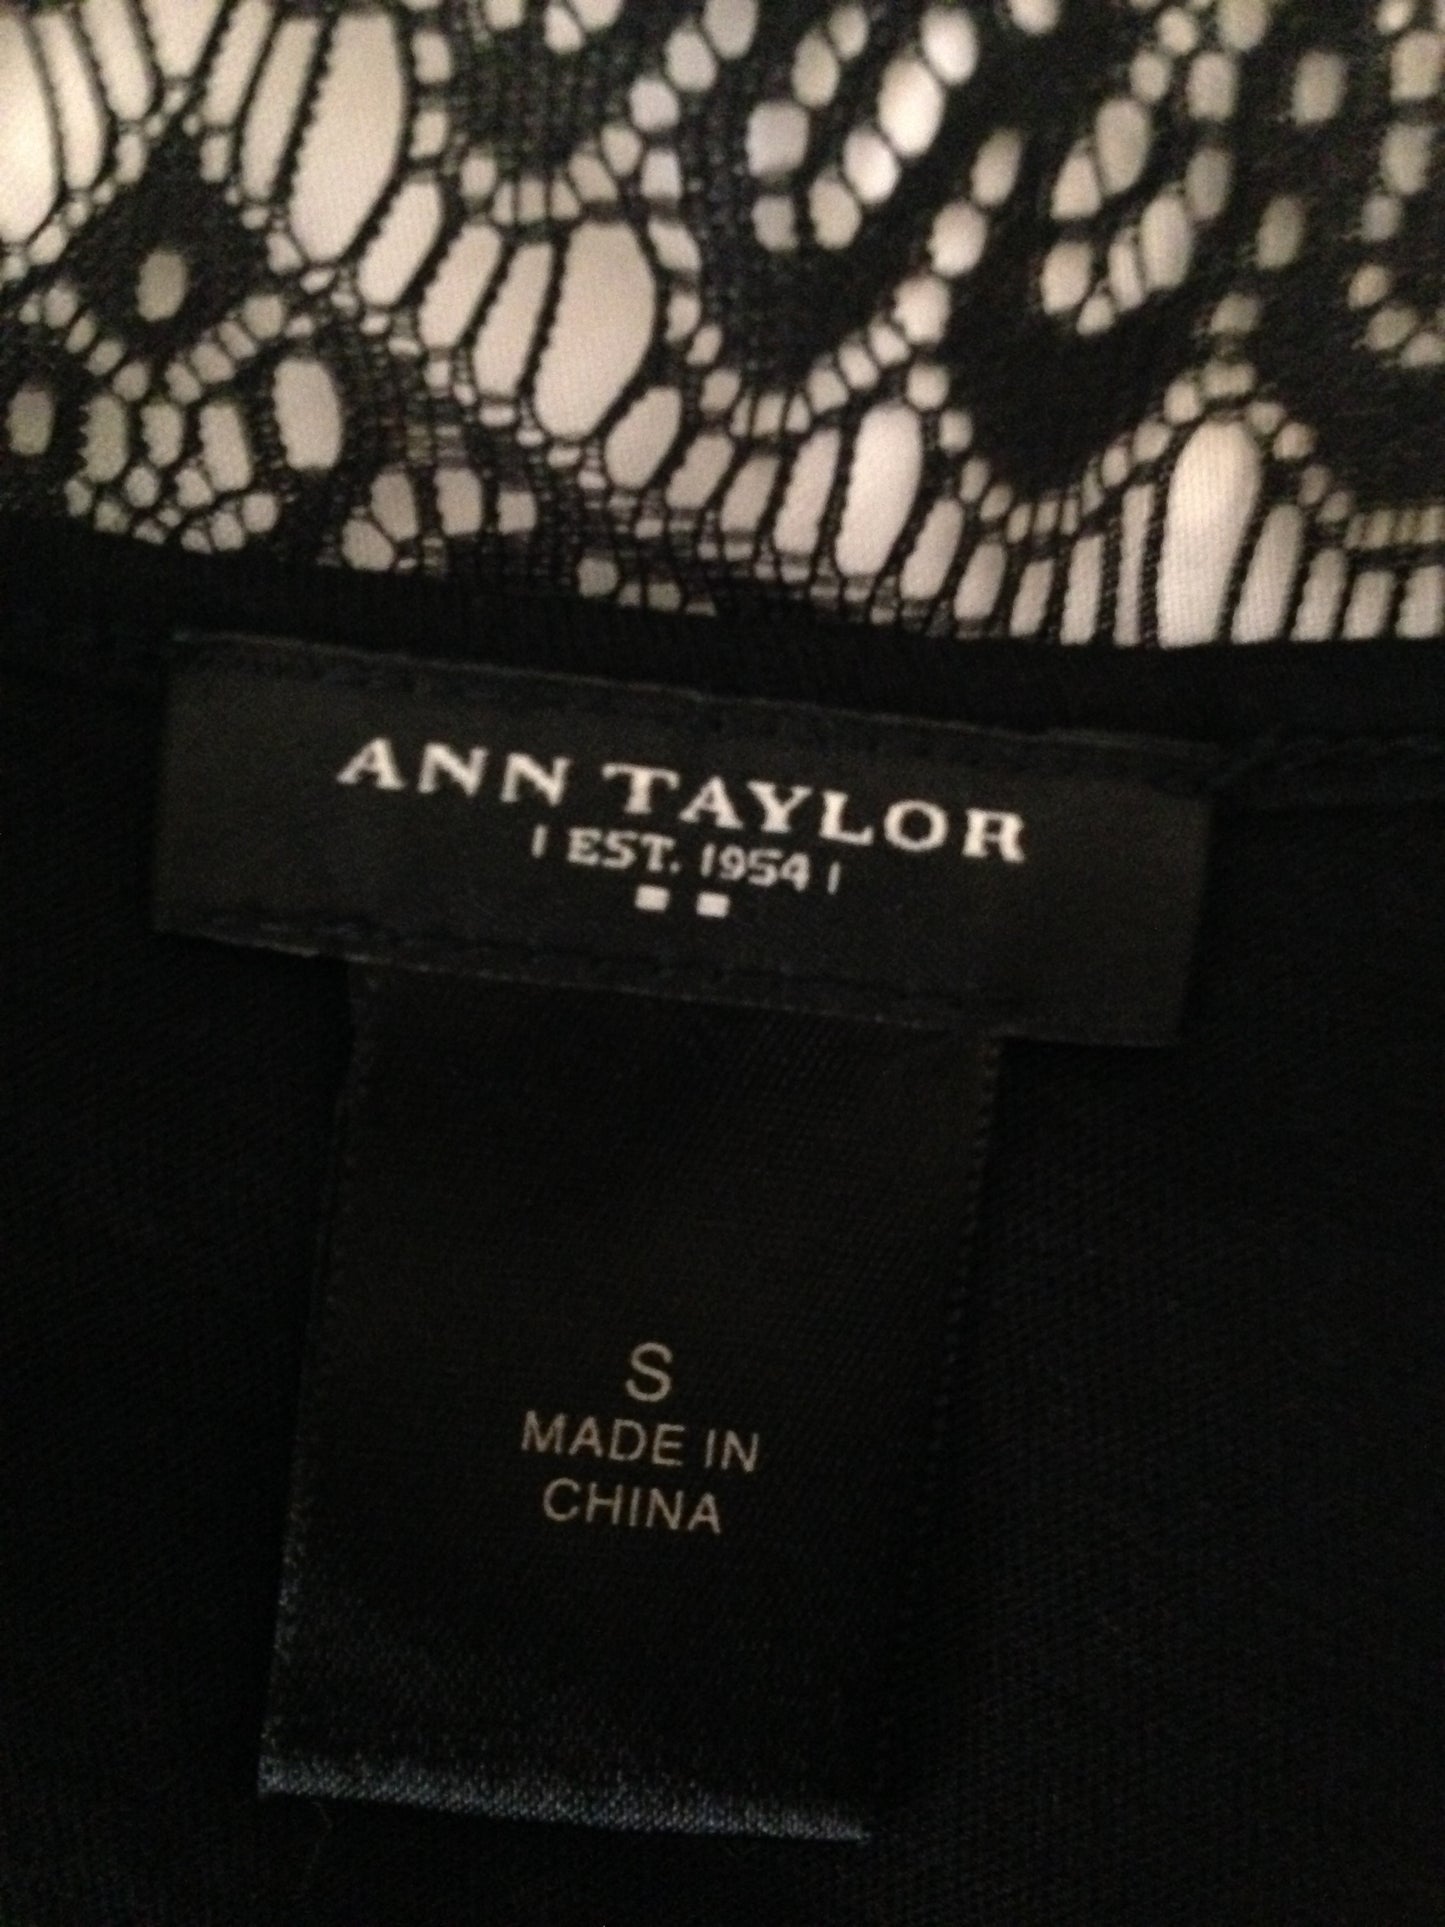 Ann Taylor Top Black Lace Size Small SKU 000209